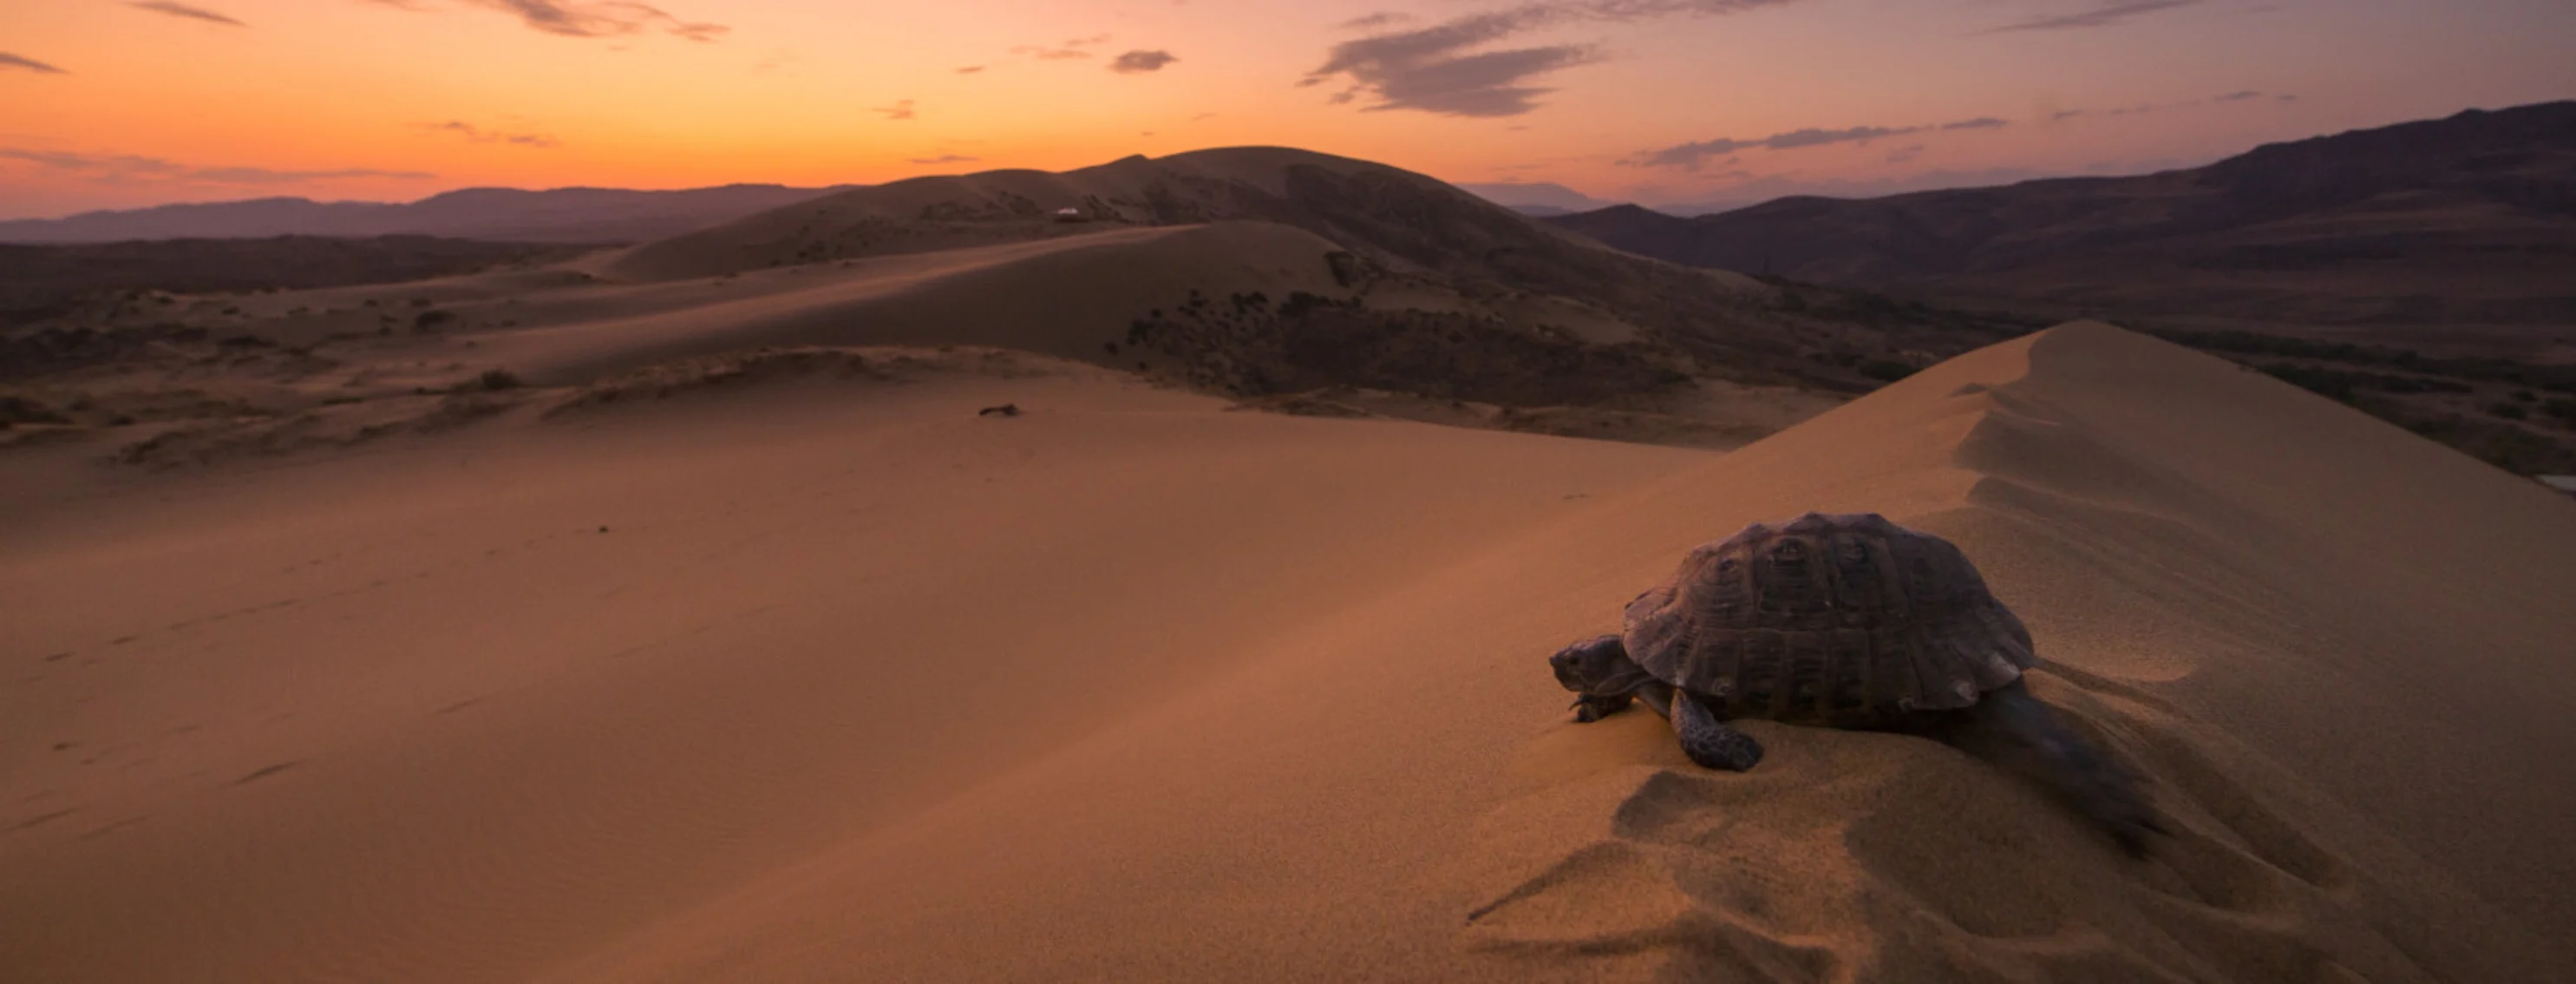 Turtle in Desert During Sunset